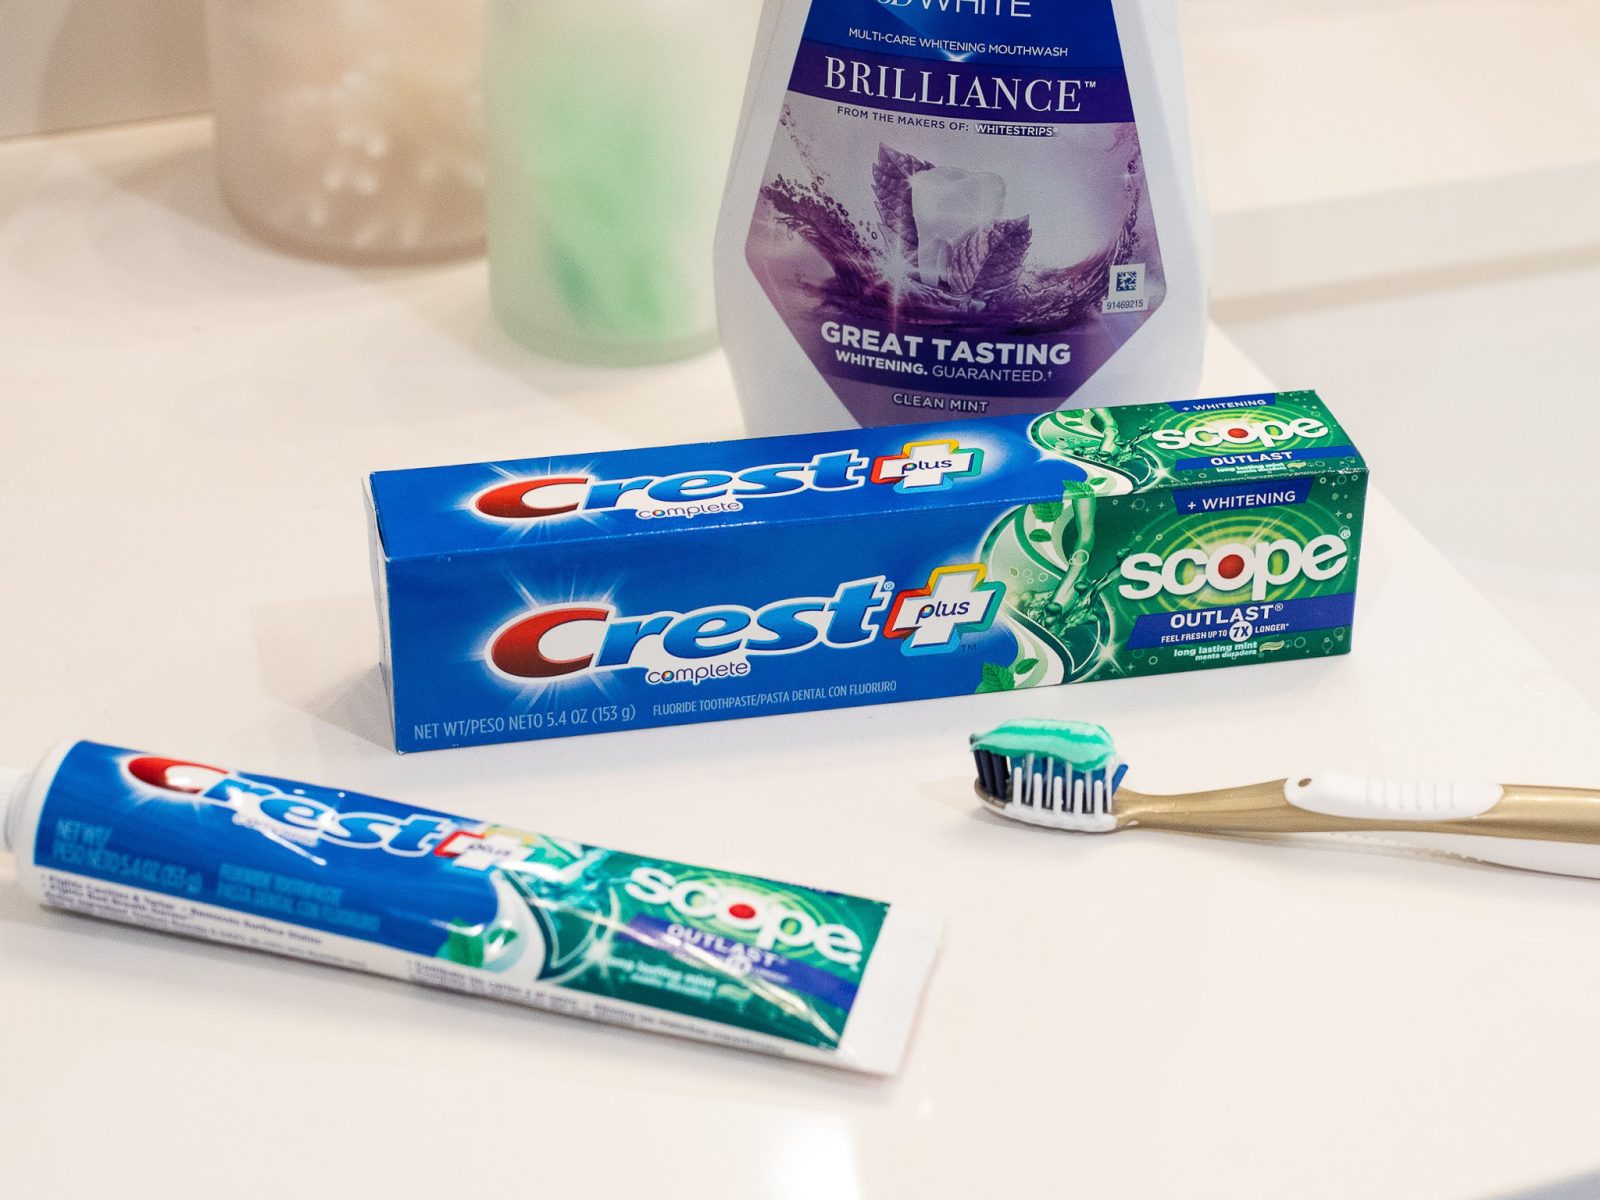 Get The Bigger Tubes Of Crest Plus Toothpaste For Just $1.99 At Kroger